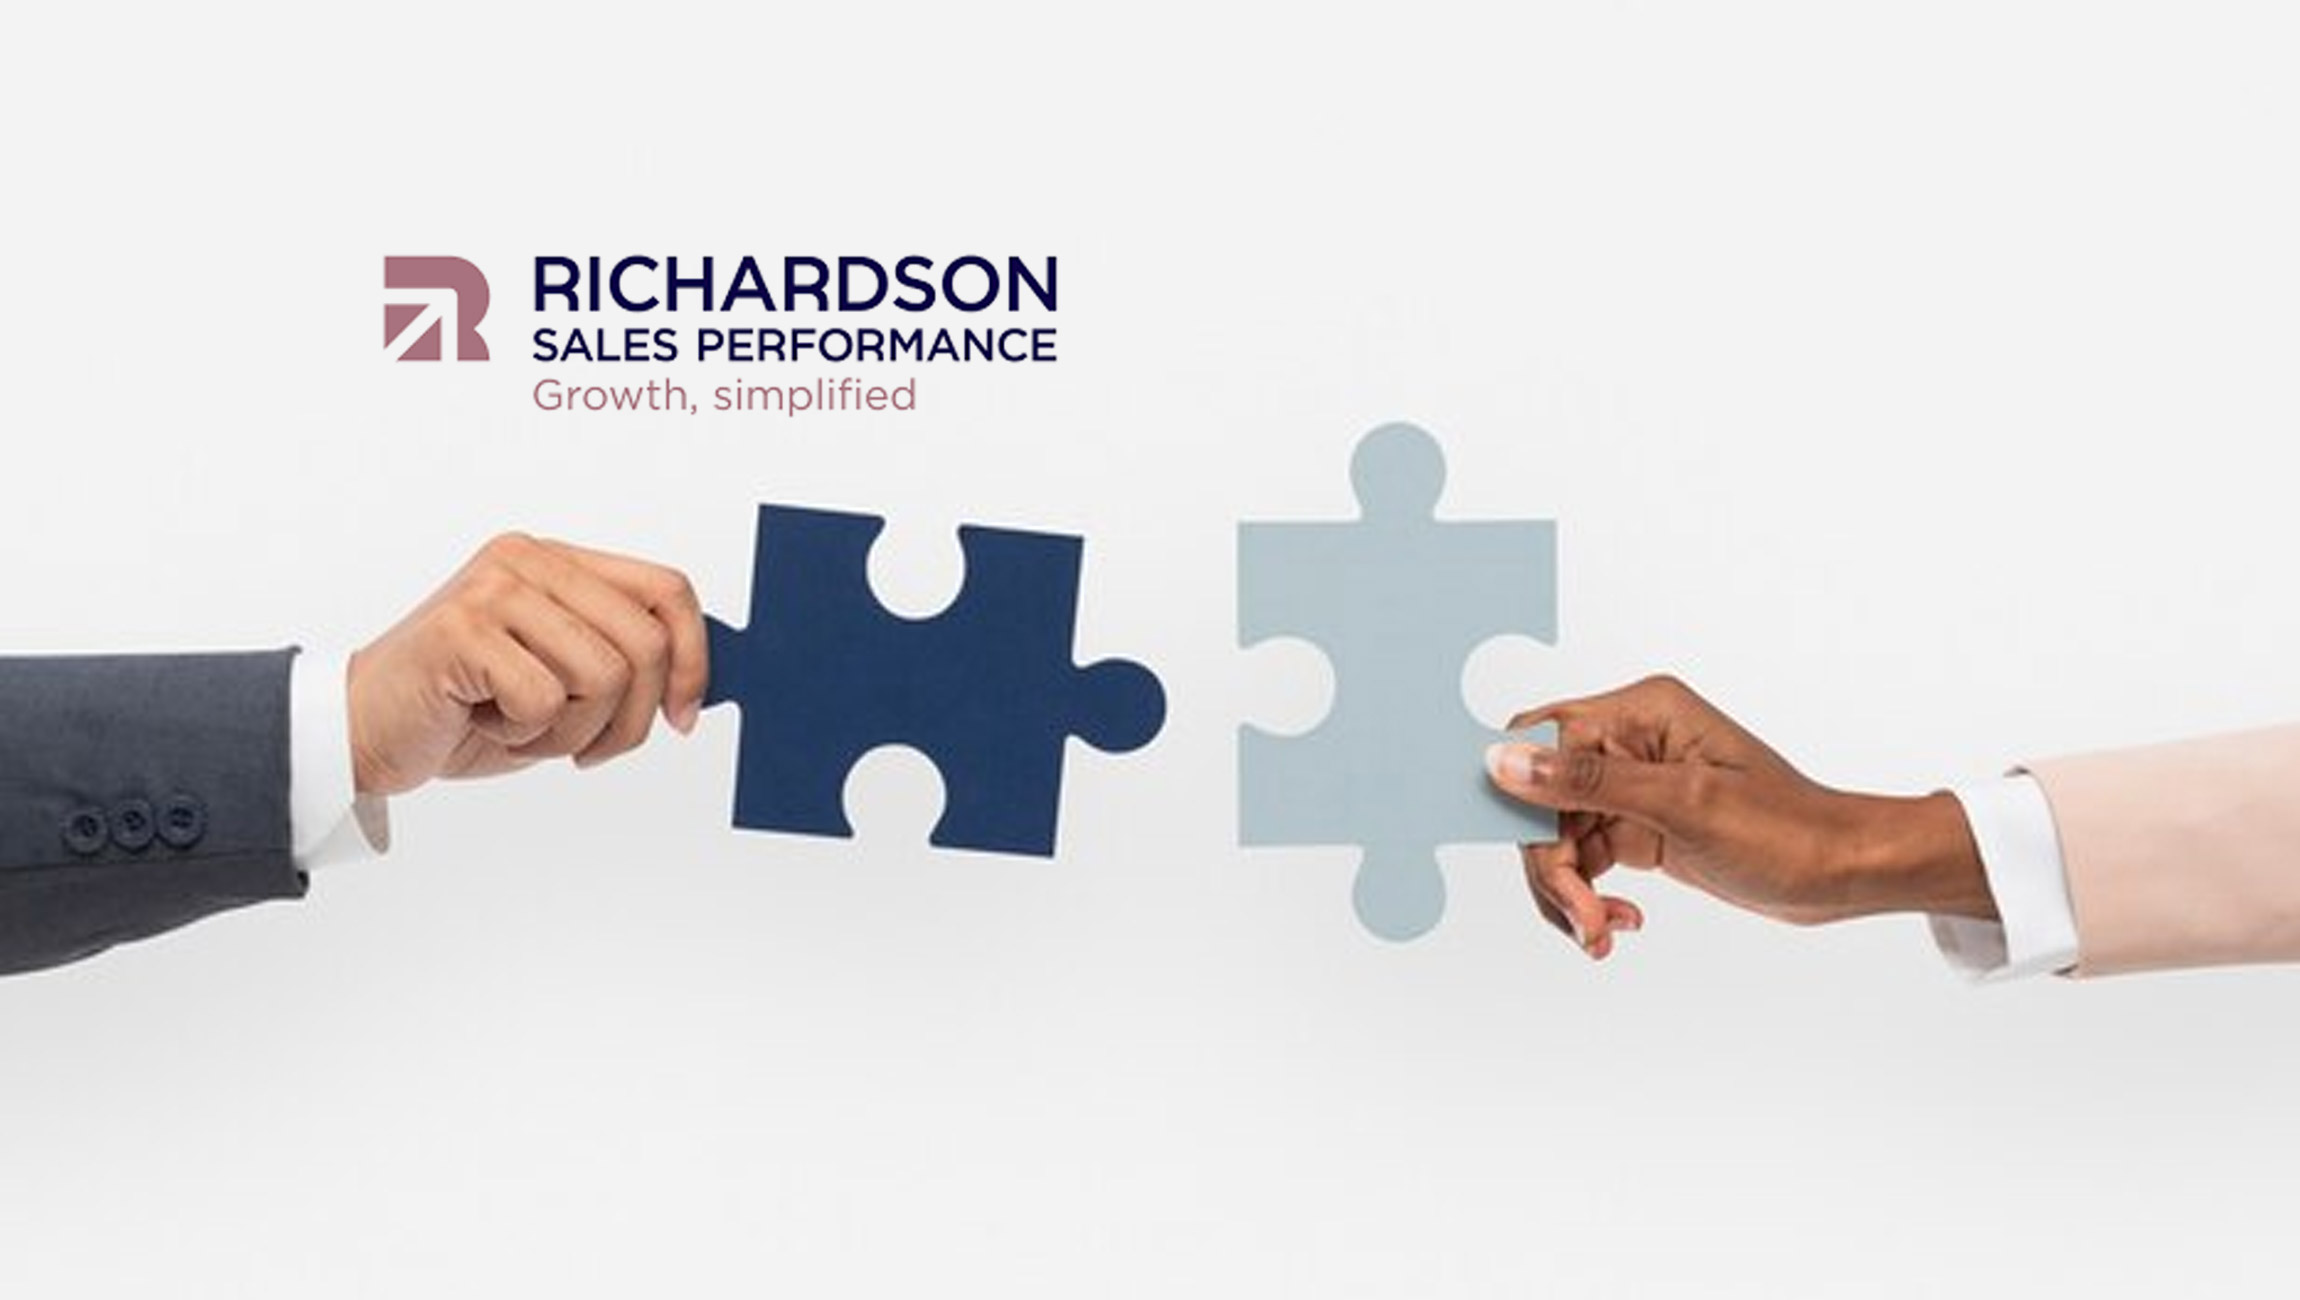 Top Global Sales Training Company Richardson Sales Performance Announces Acquisition of DoubleDigit Sales, Leading Canadian Sales Training Provider